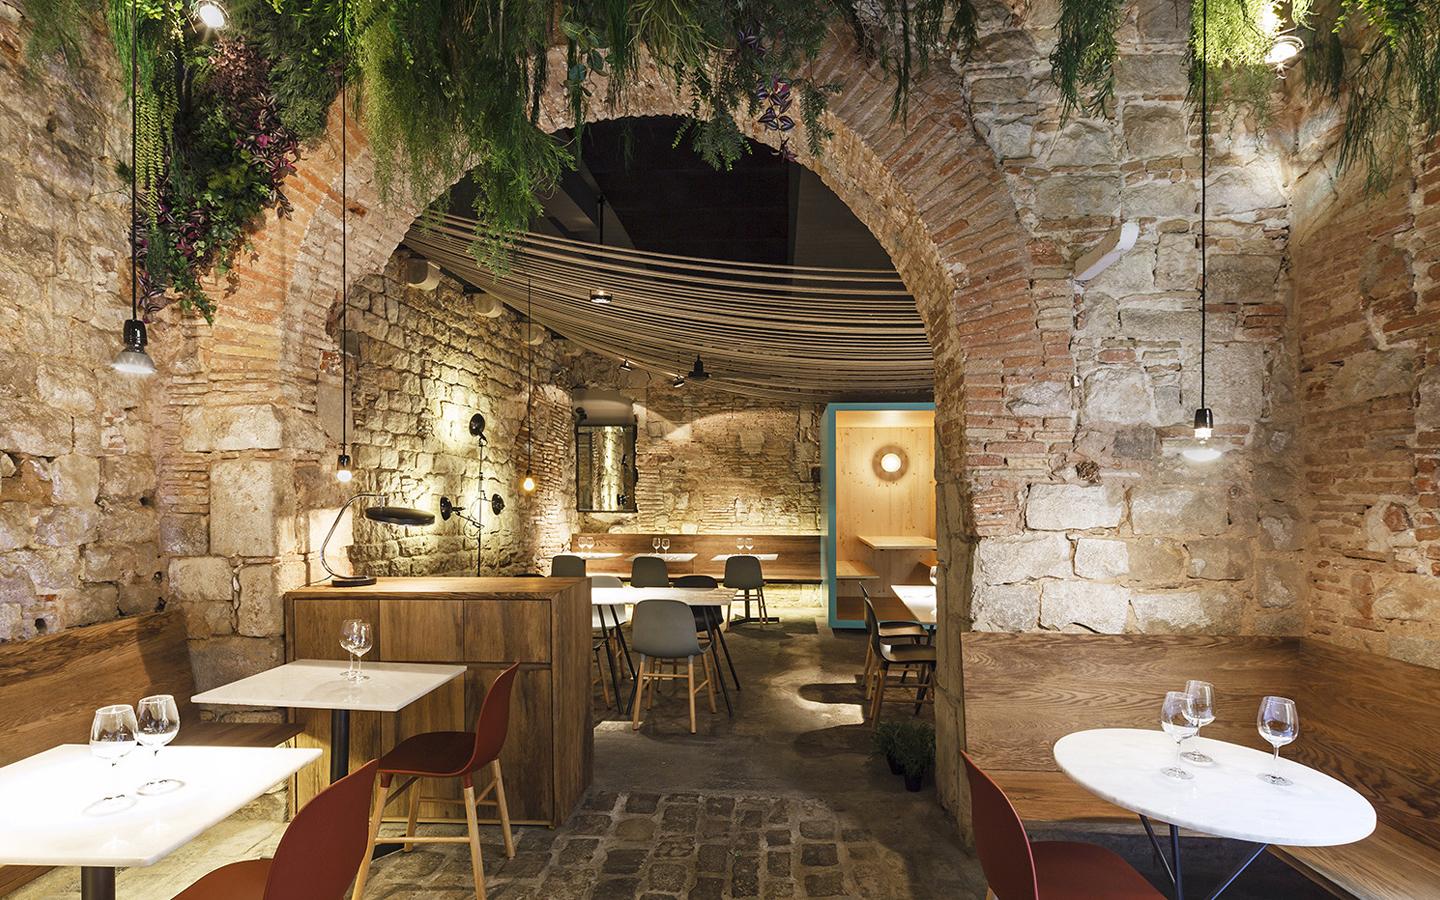 La Bona Sort: restaurante em Barcelona com estilo medieval